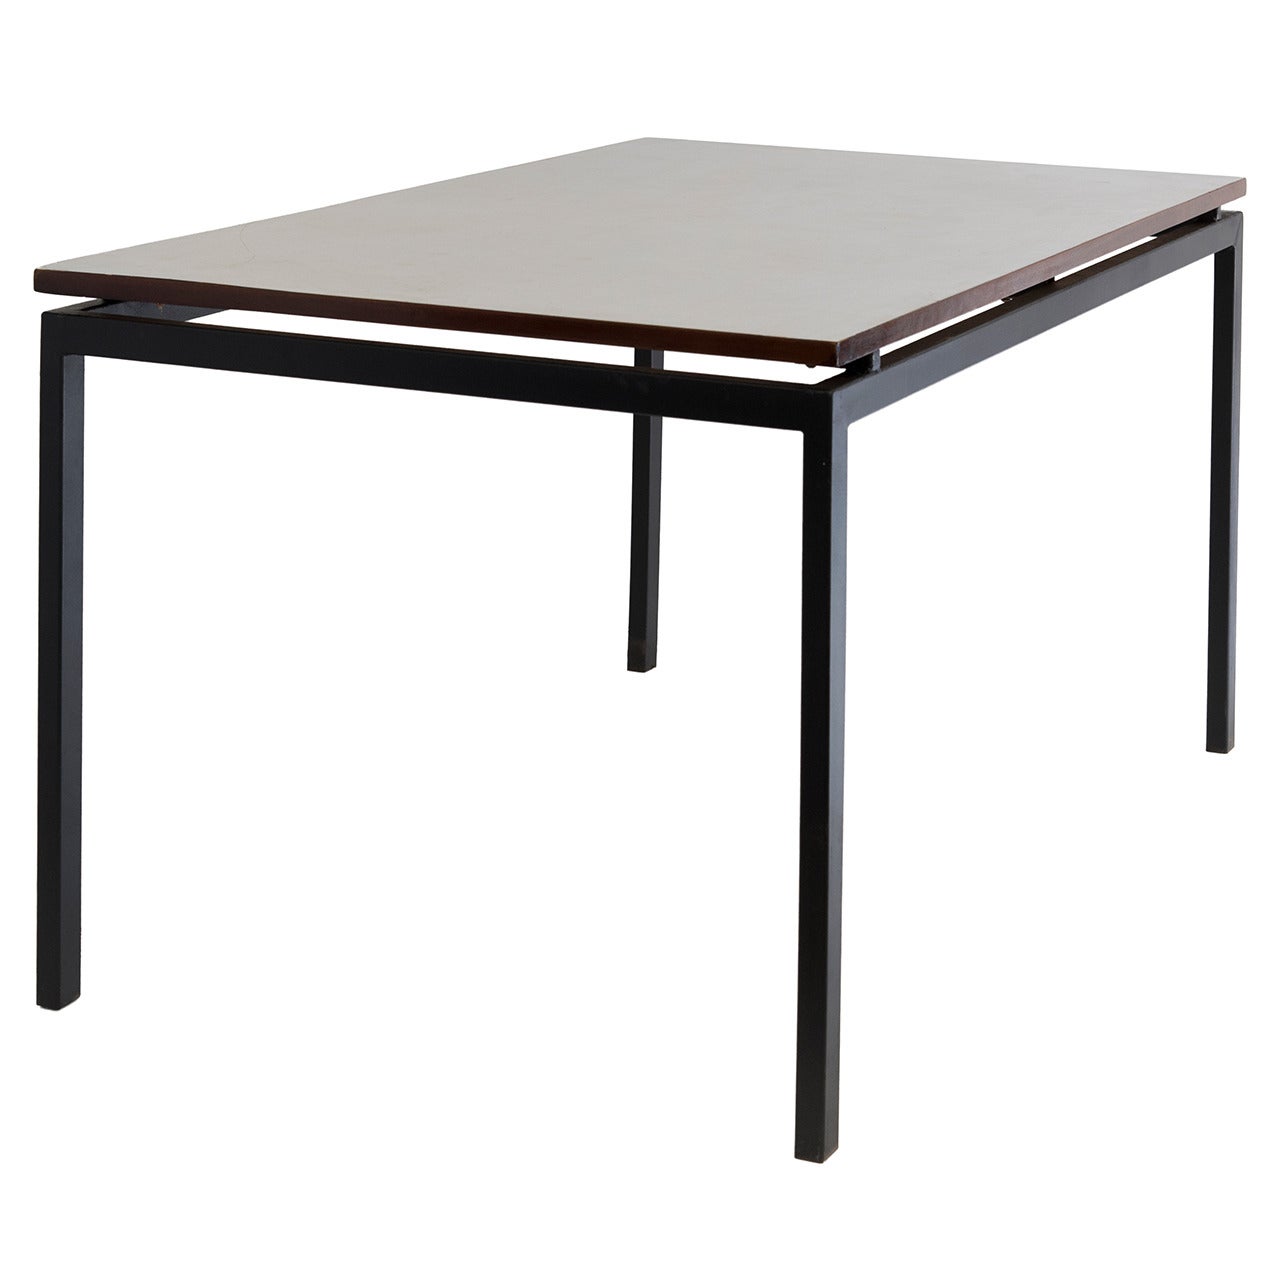 Charlotte Perriand, Table Designed for Cité Cansado, Mauritania, 1958, France